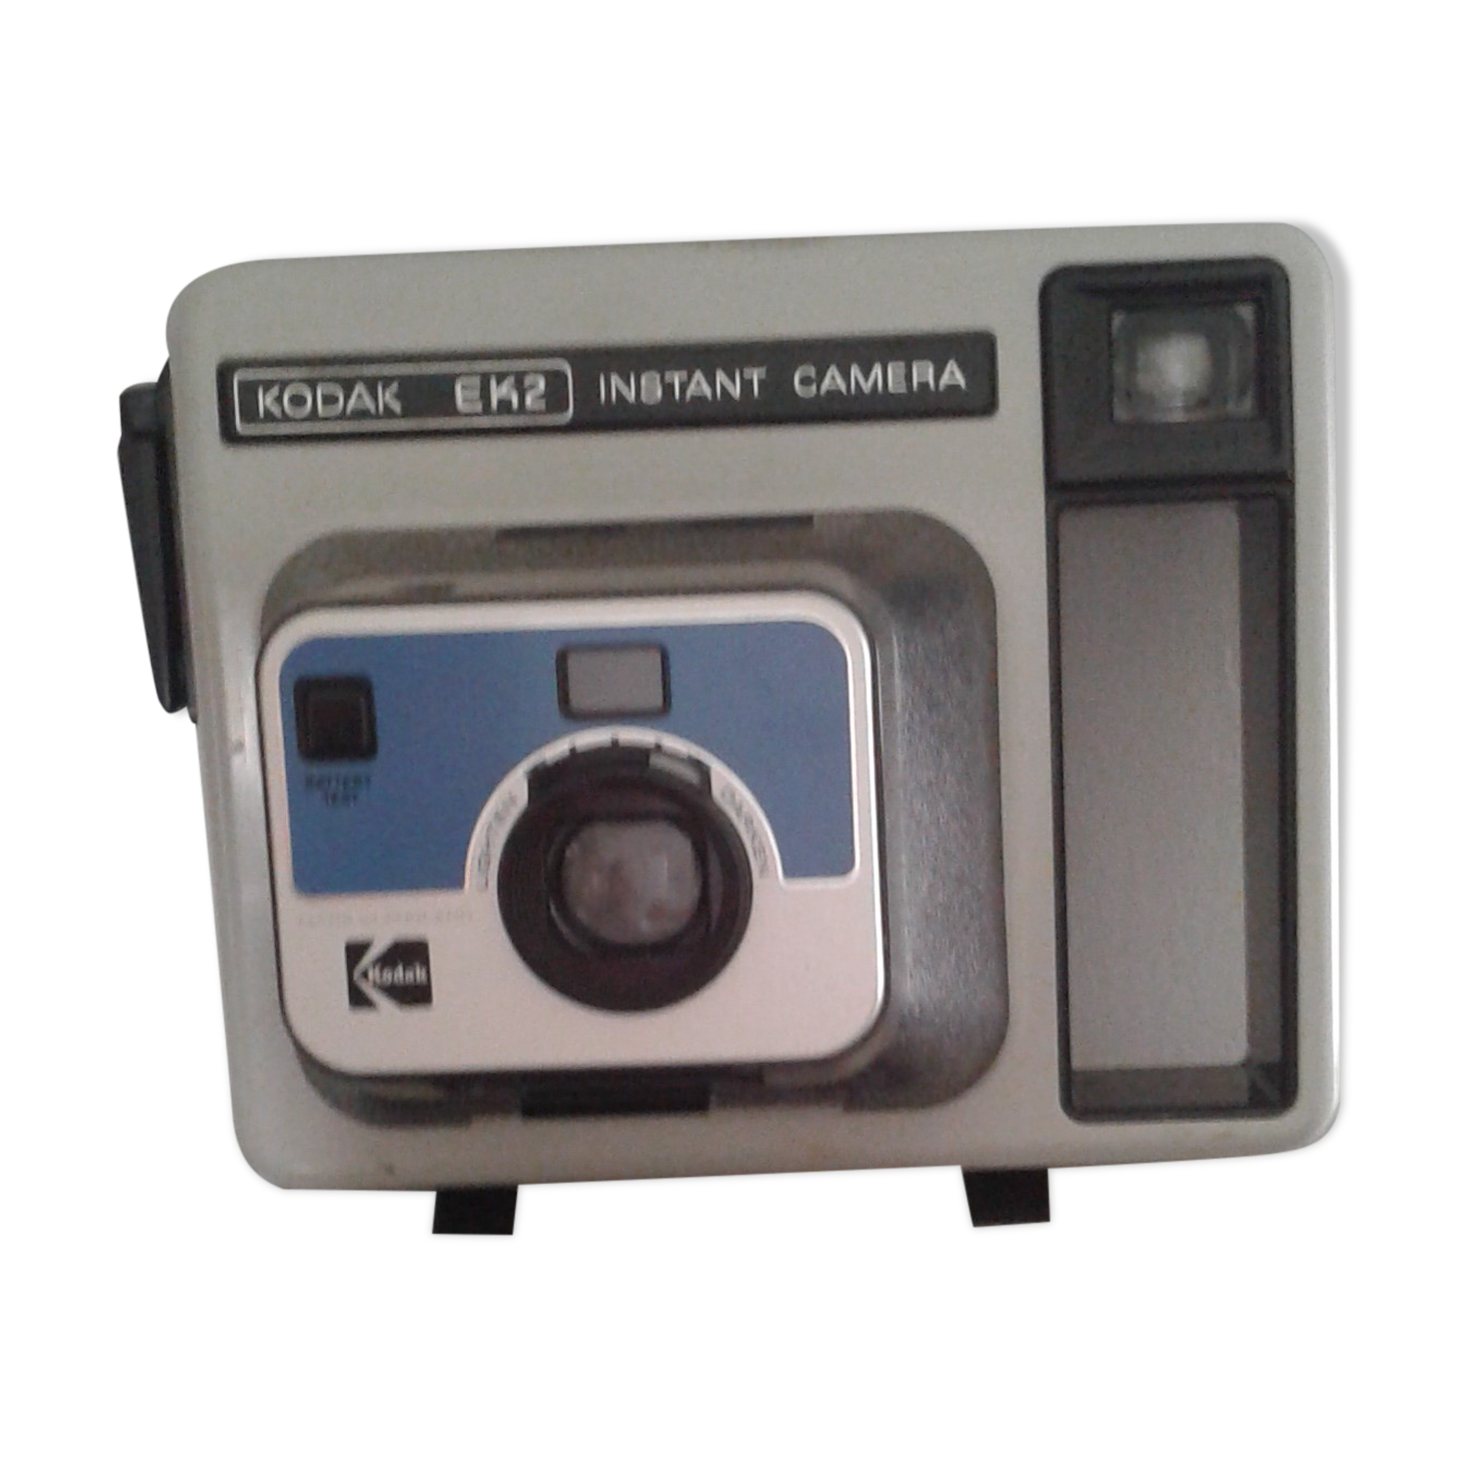 appareil photo instantane kodak ek2 instant camera 